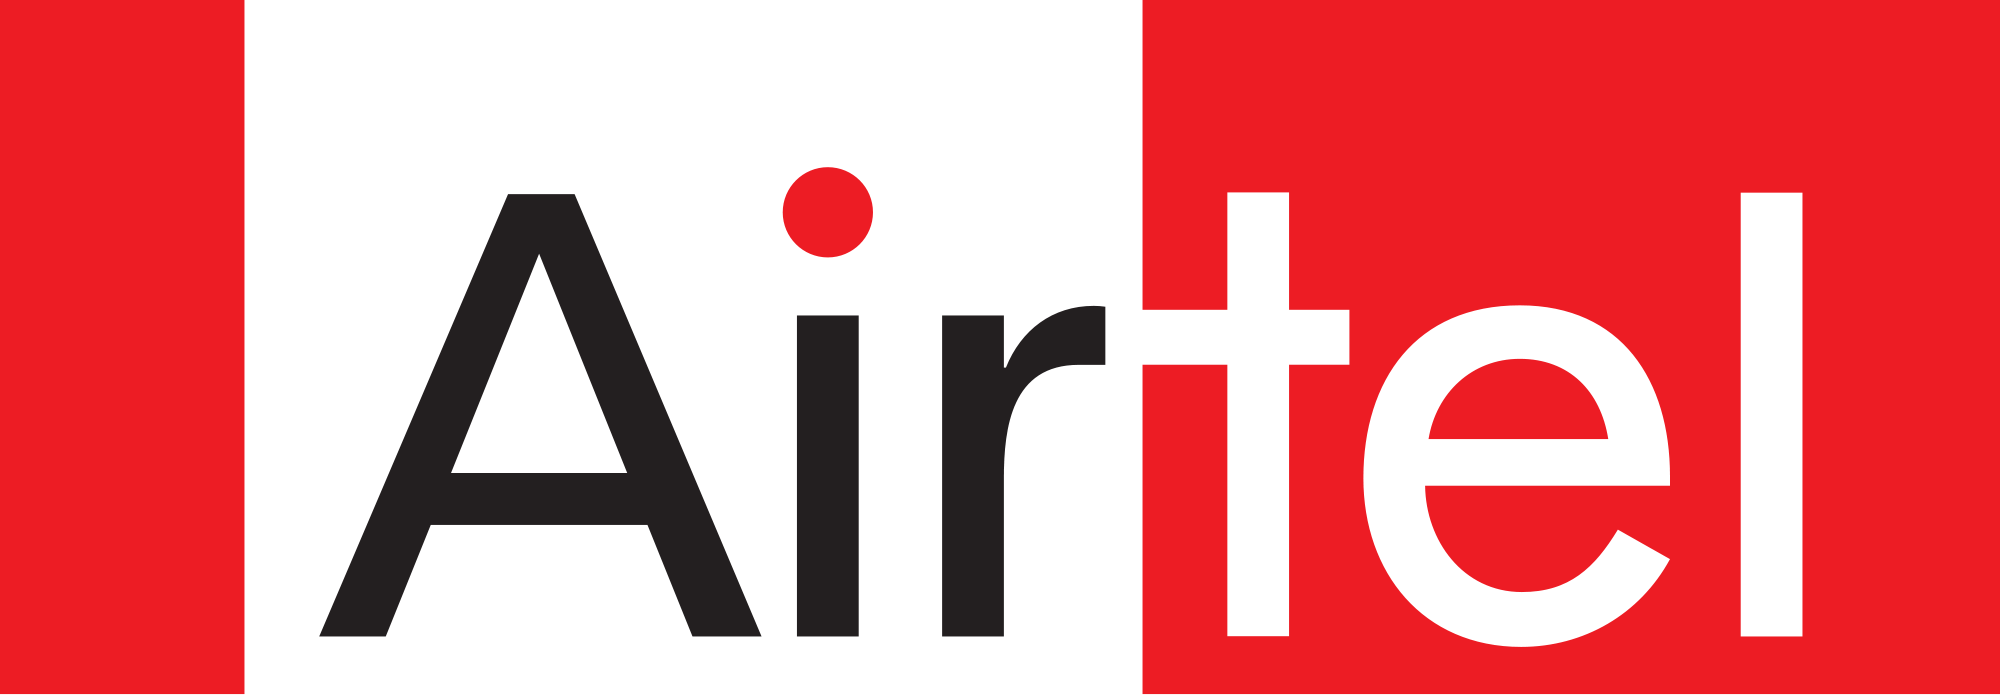 Bharti Airtel Logo - Bharti Airtel logo.svg